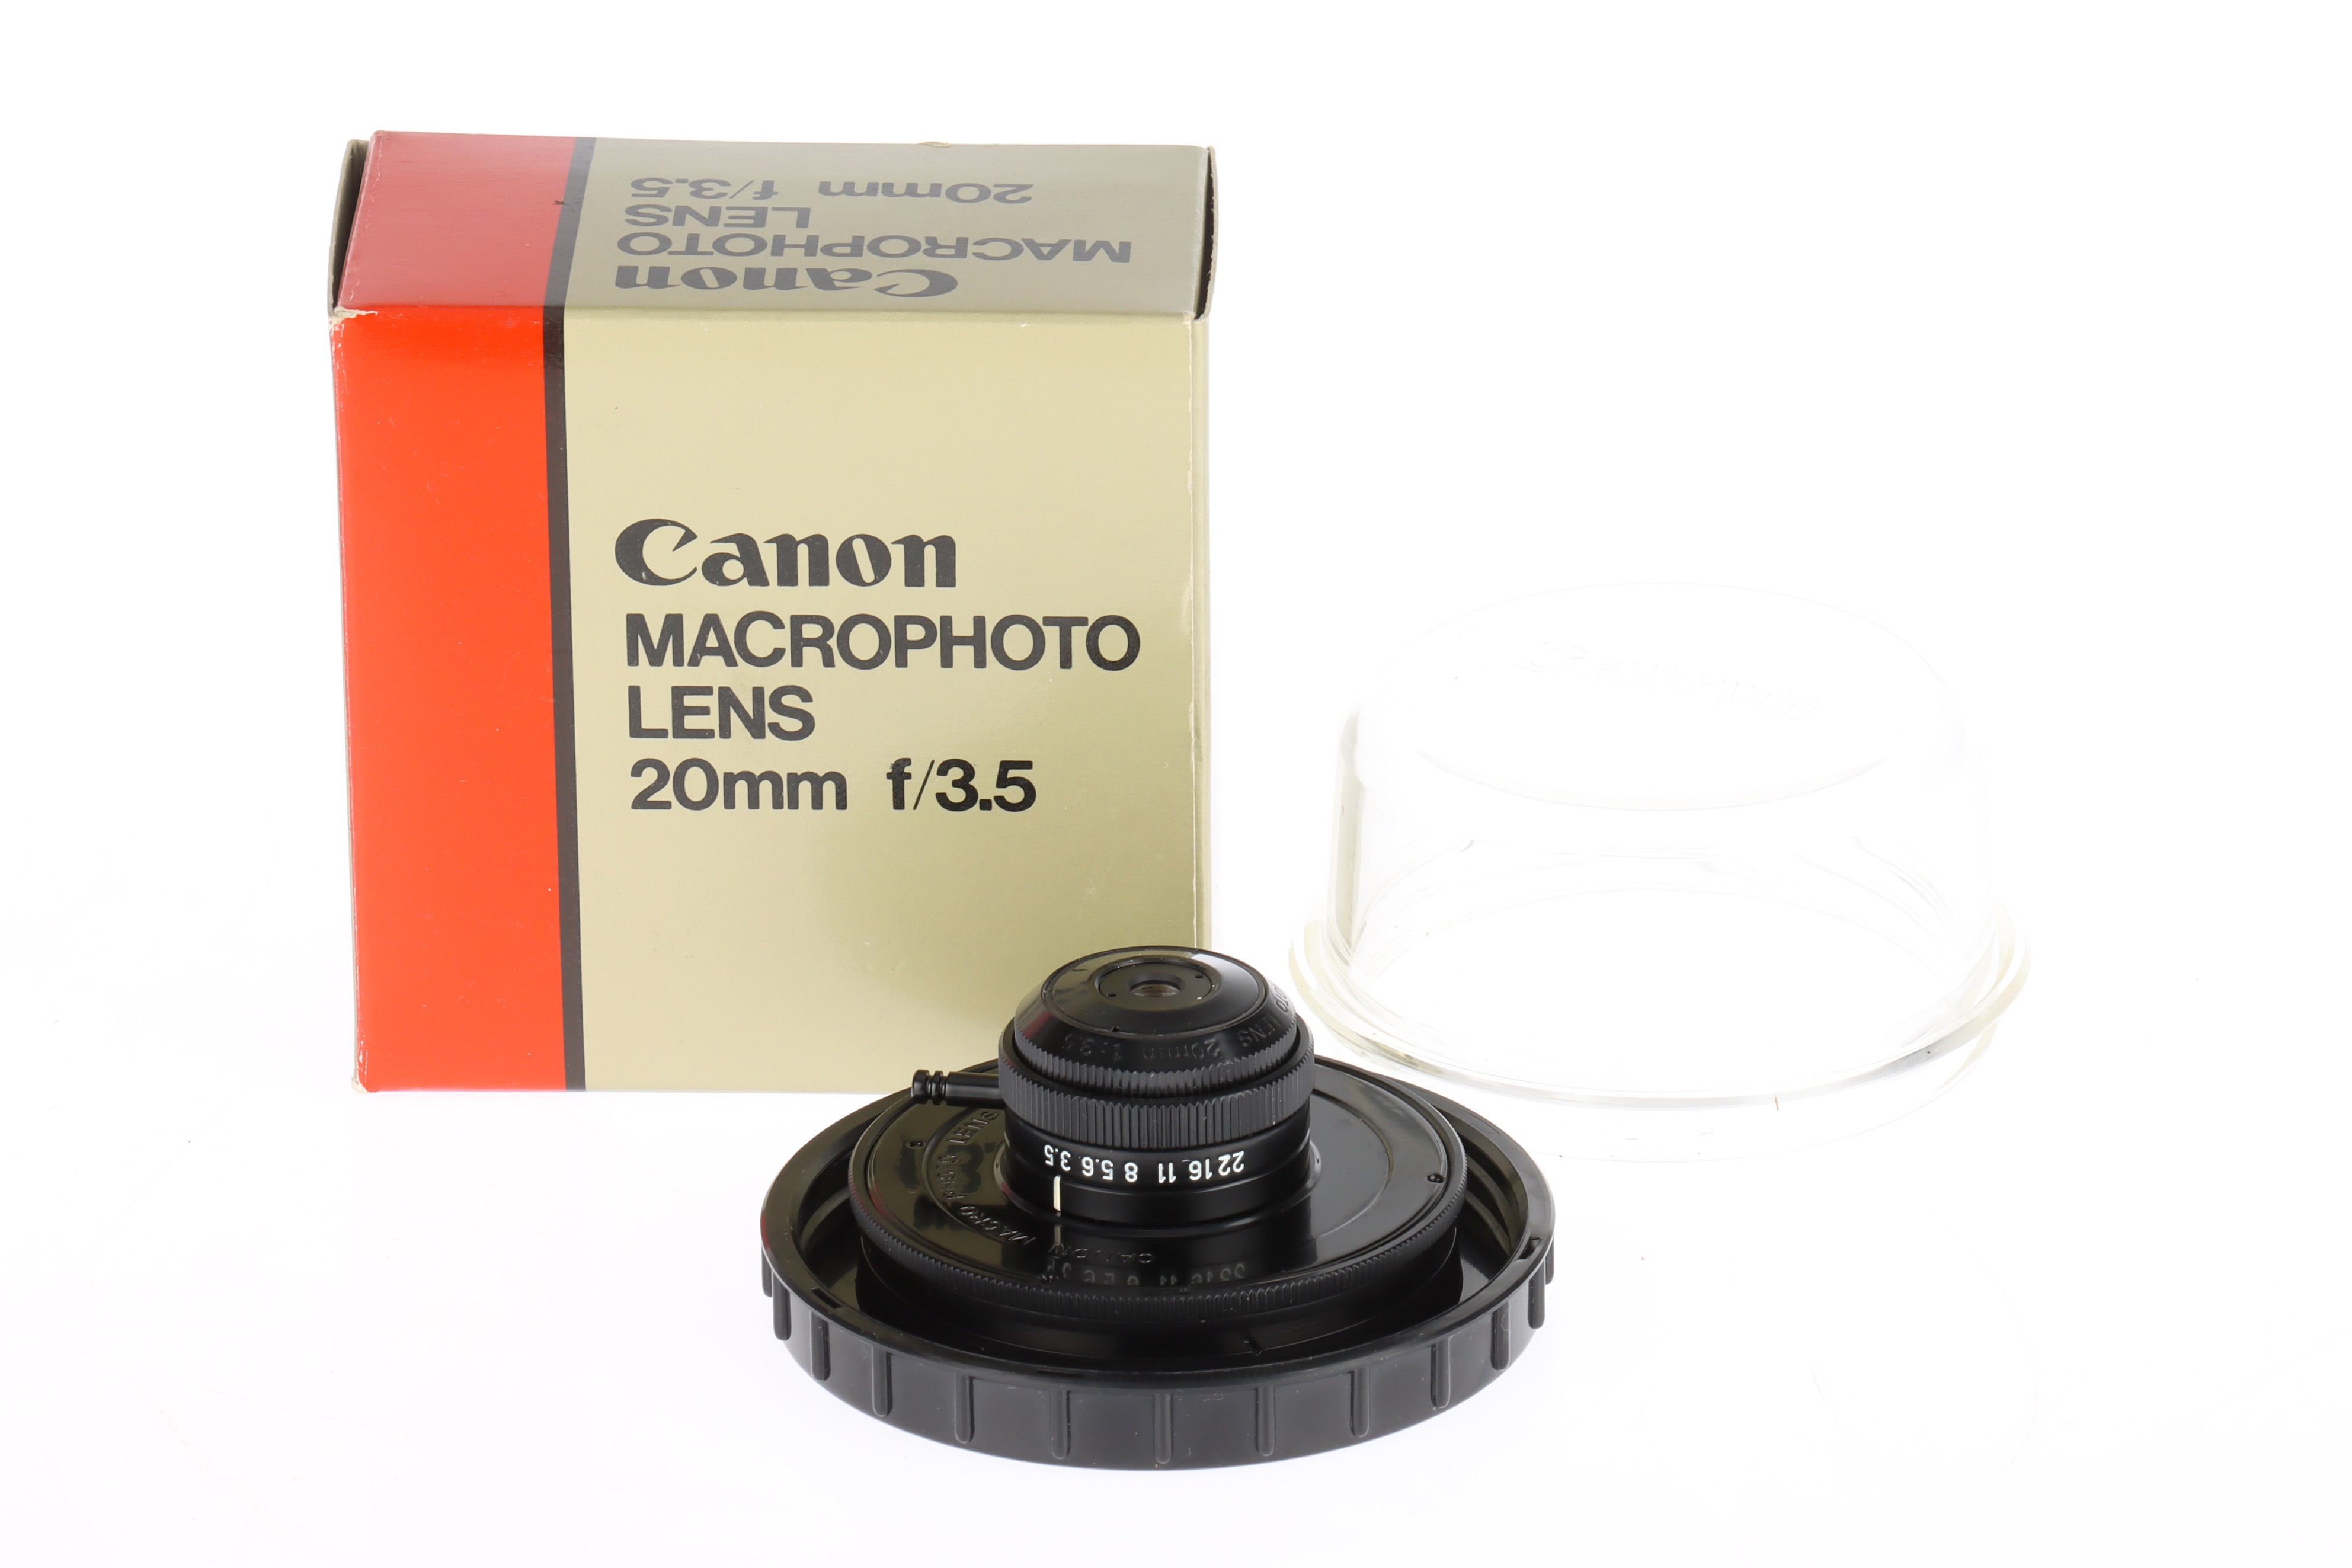 A Canon Macro Photo f/3.5 20mm Lens